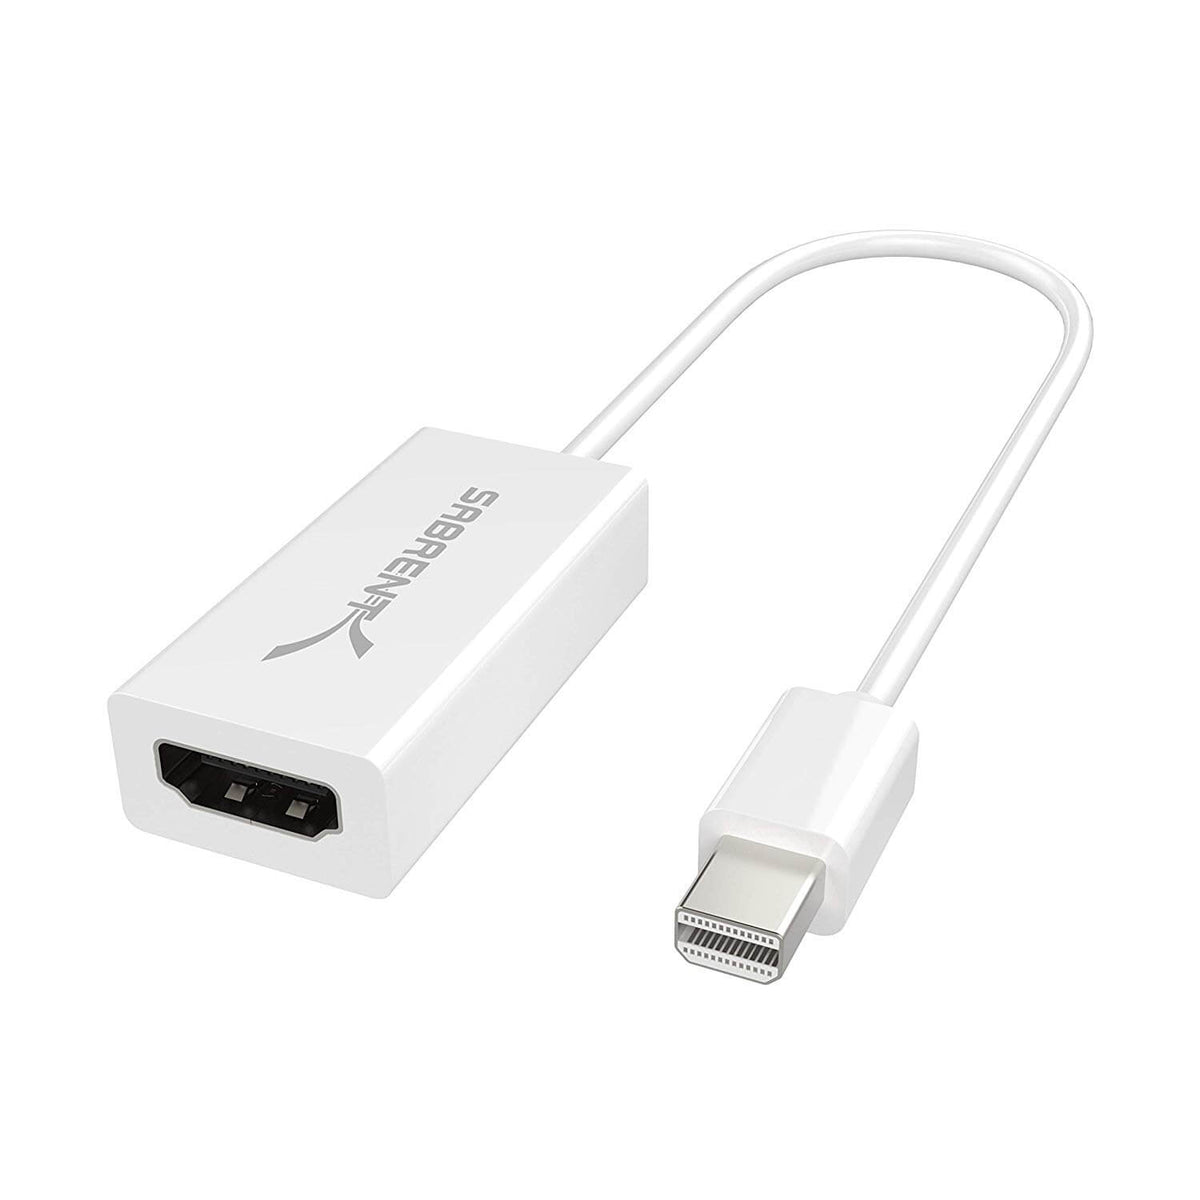 Mini DisplayPort (Thunderbolt 2) to HDMI Adapter